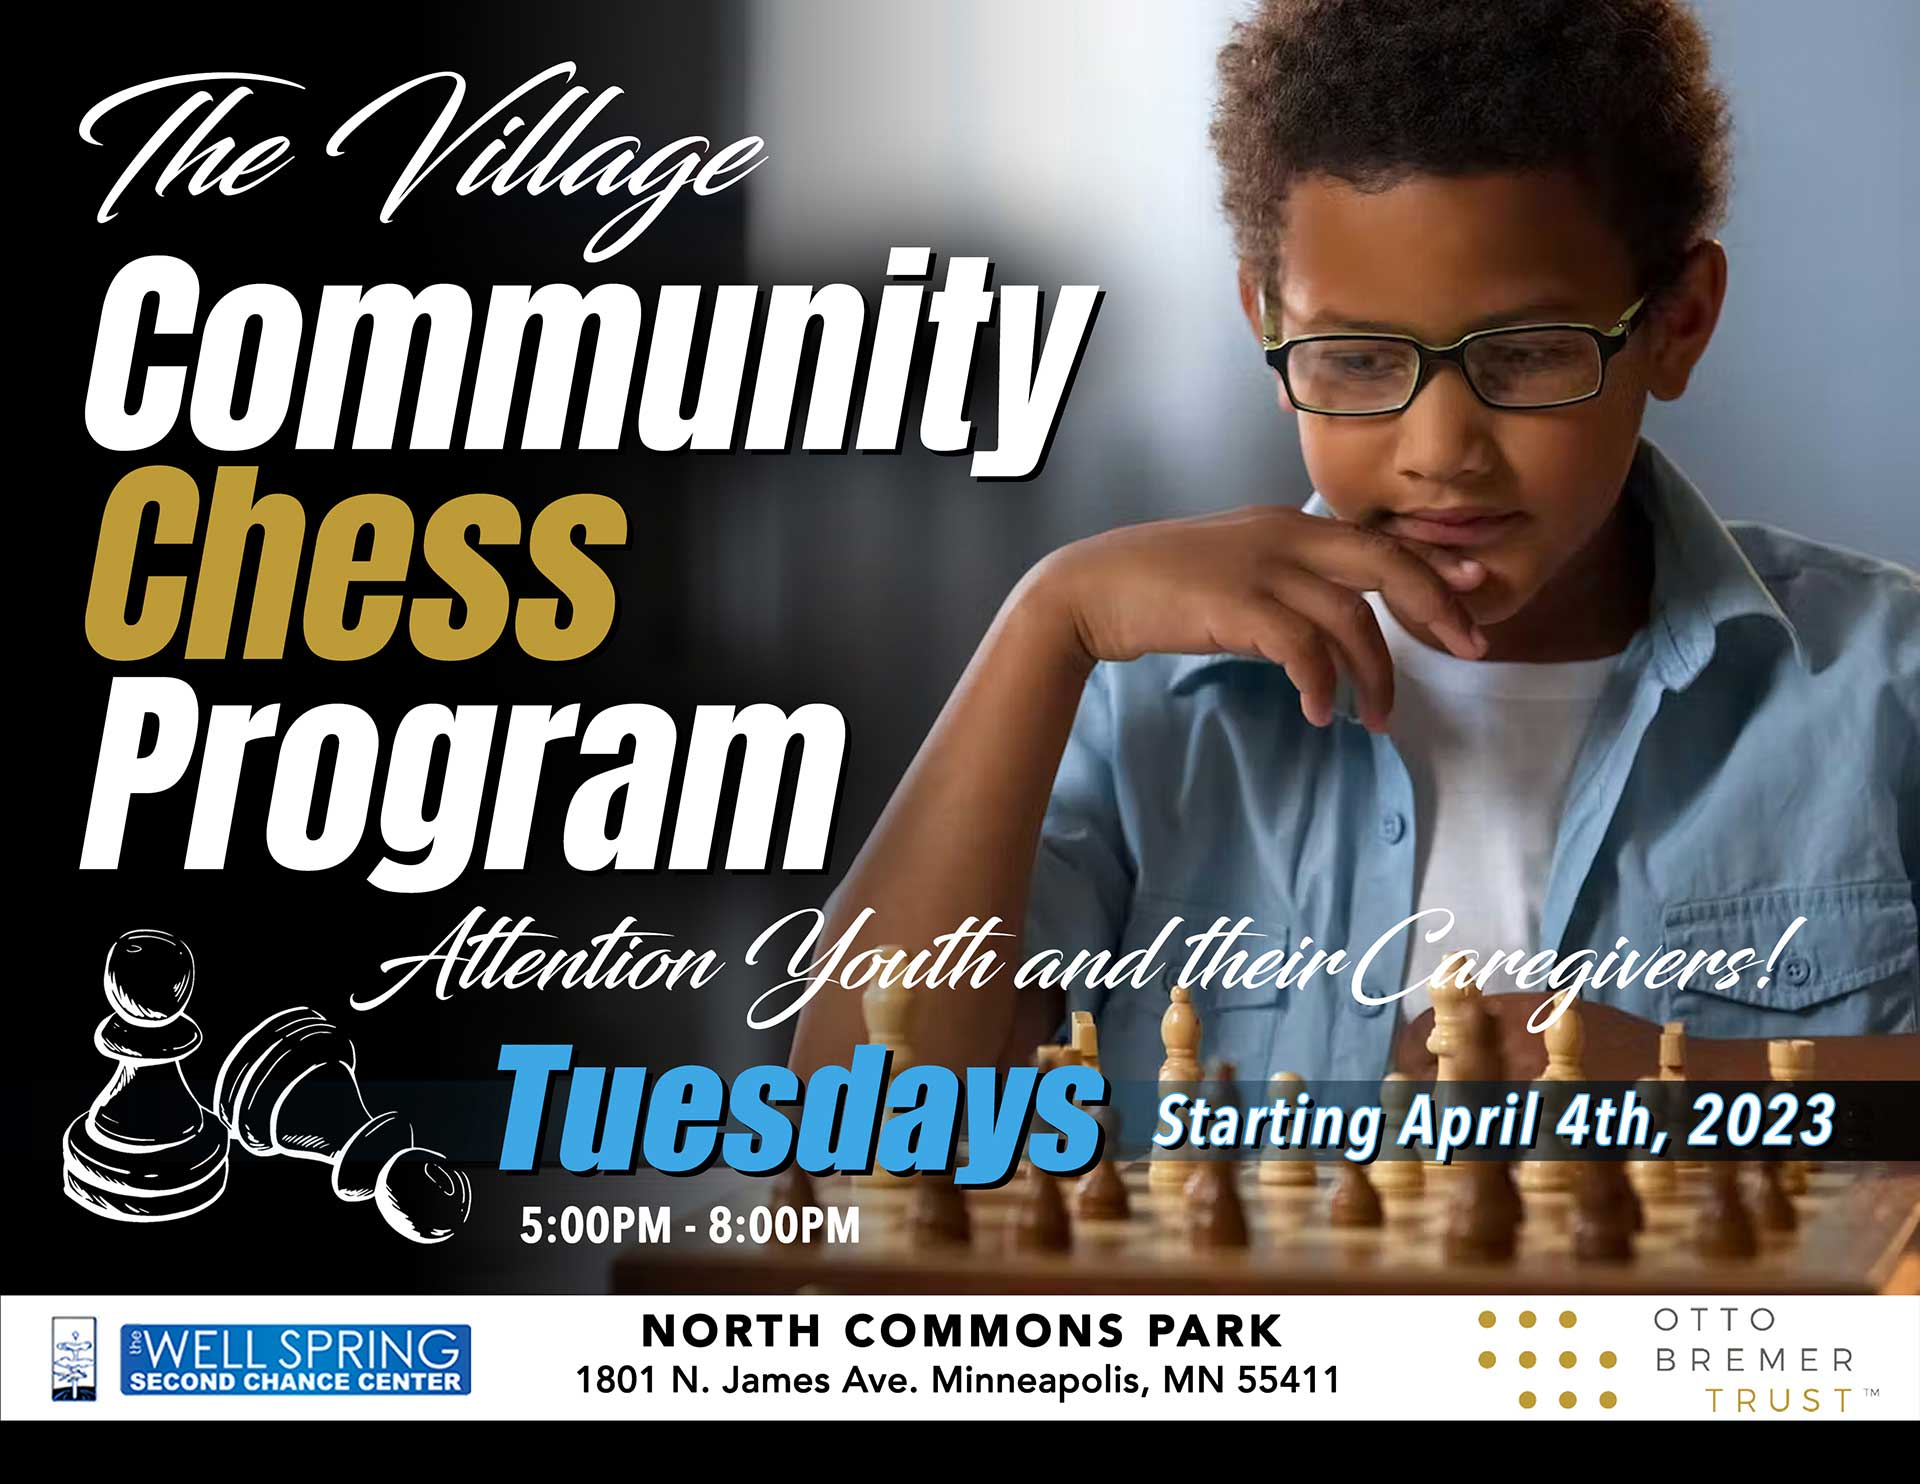 The Village Community Chess Program